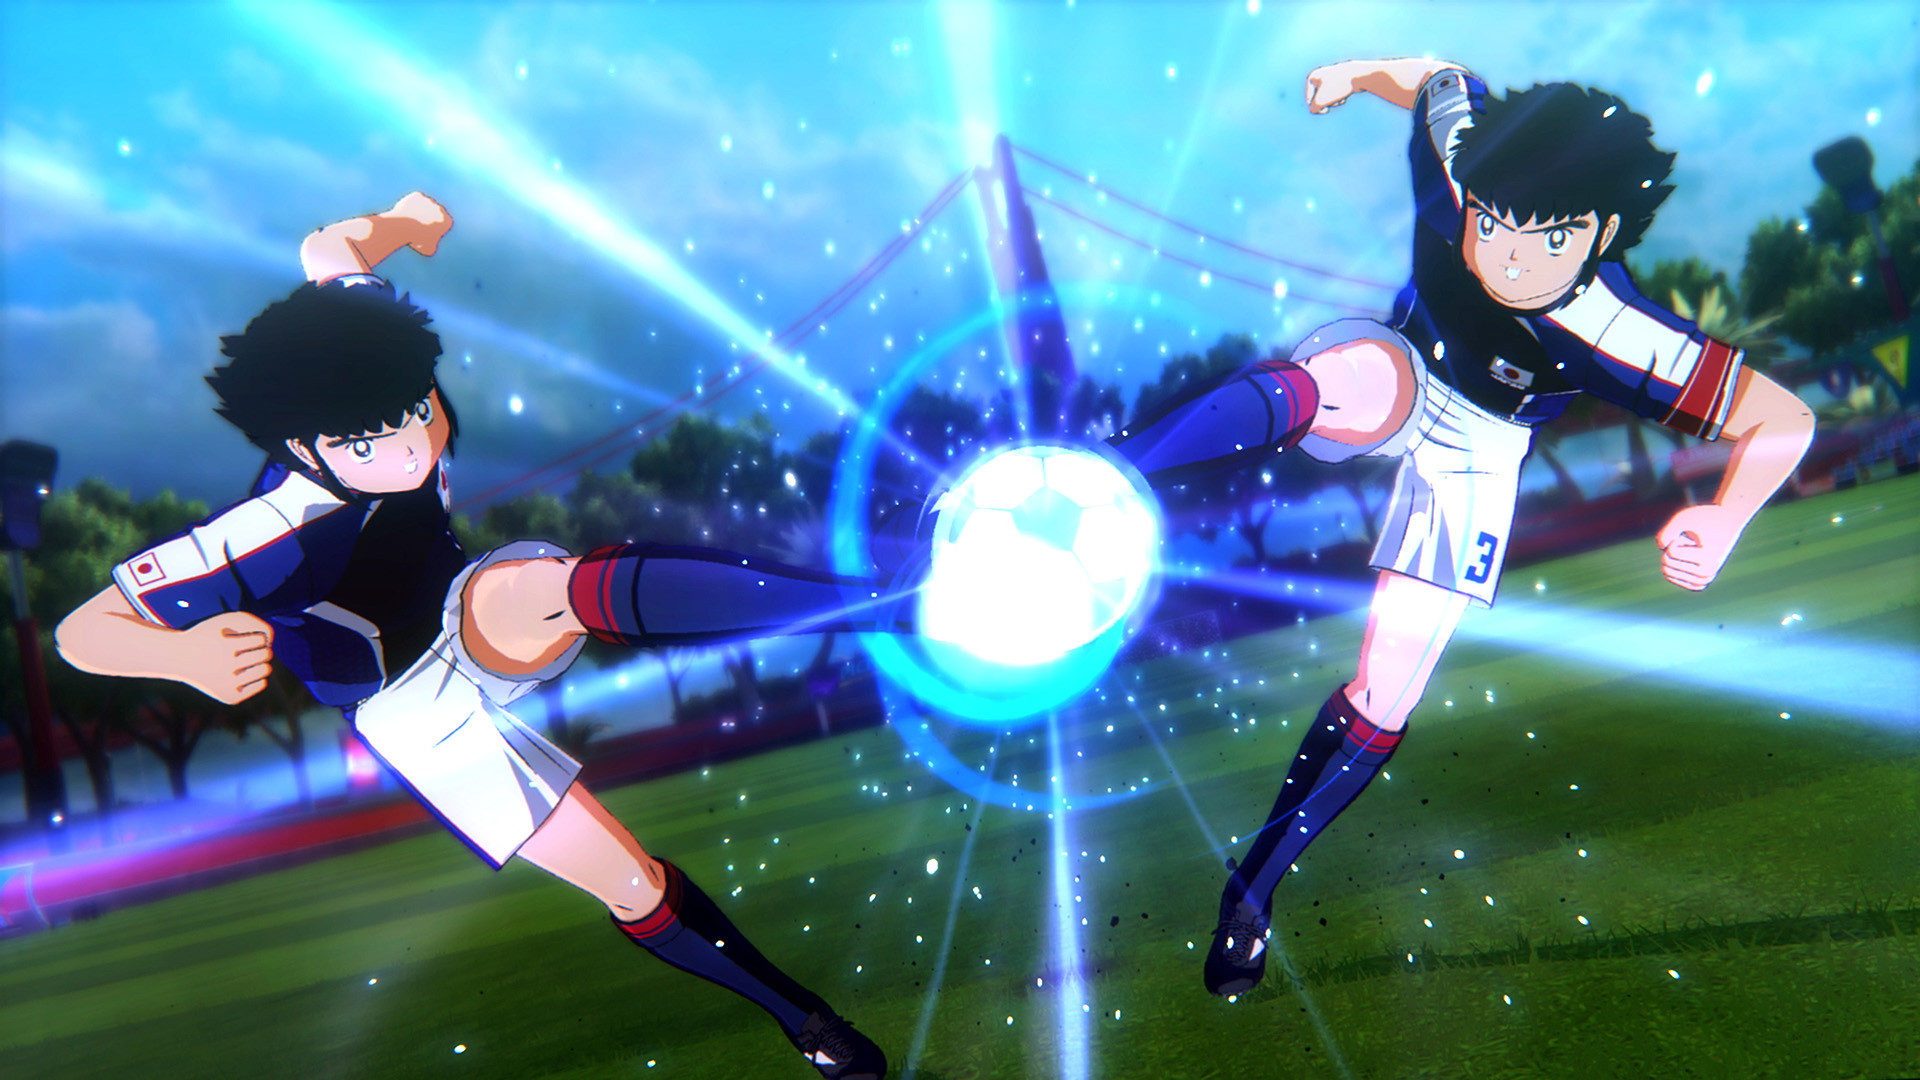 Captain Tsubasa: Rise of New Champions Tachibana Brothers Mission Featured Screenshot #1